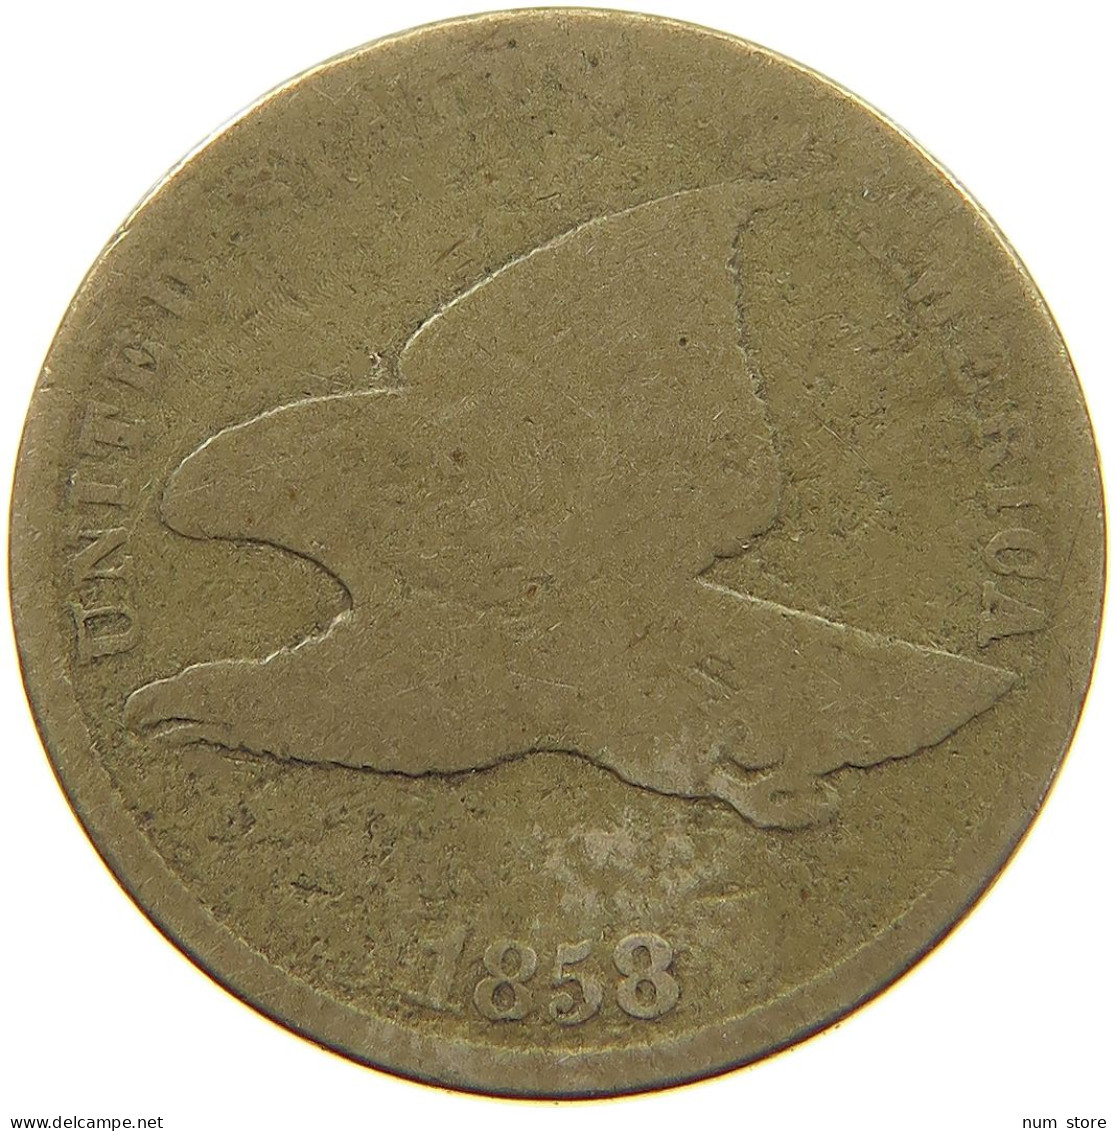 UNITED STATES OF AMERICA CENT 1858 FLYING EAGLE #c007 0181 - 1856-1858: Flying Eagle